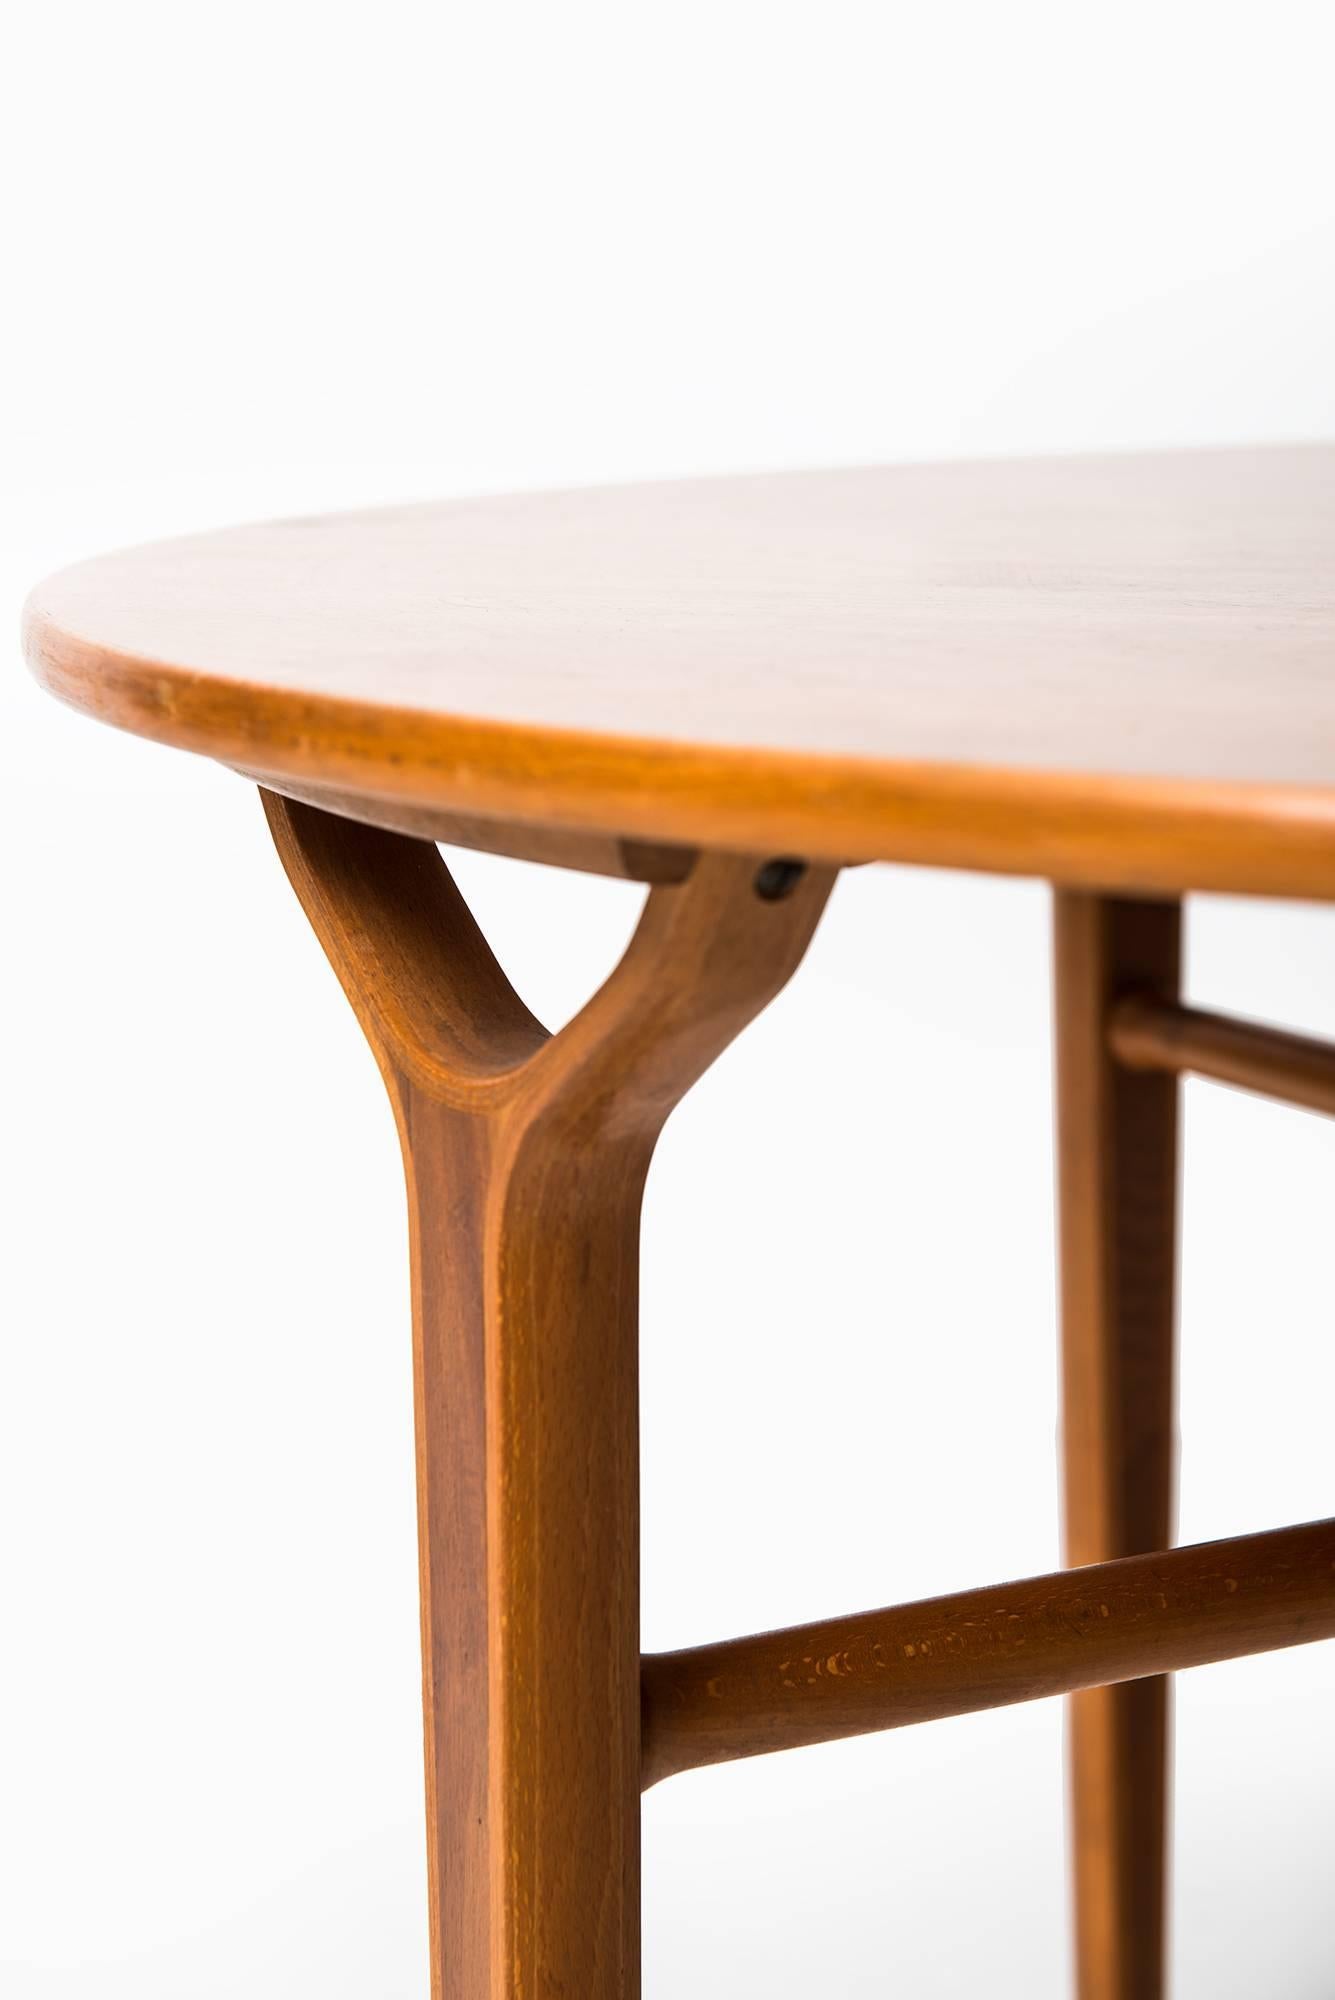 Rare coffee table model 6900 / AX designed by Peter Hvidt & Orla Mølgaard-Nielsen. Produced by Fritz Hansen in Denmark.